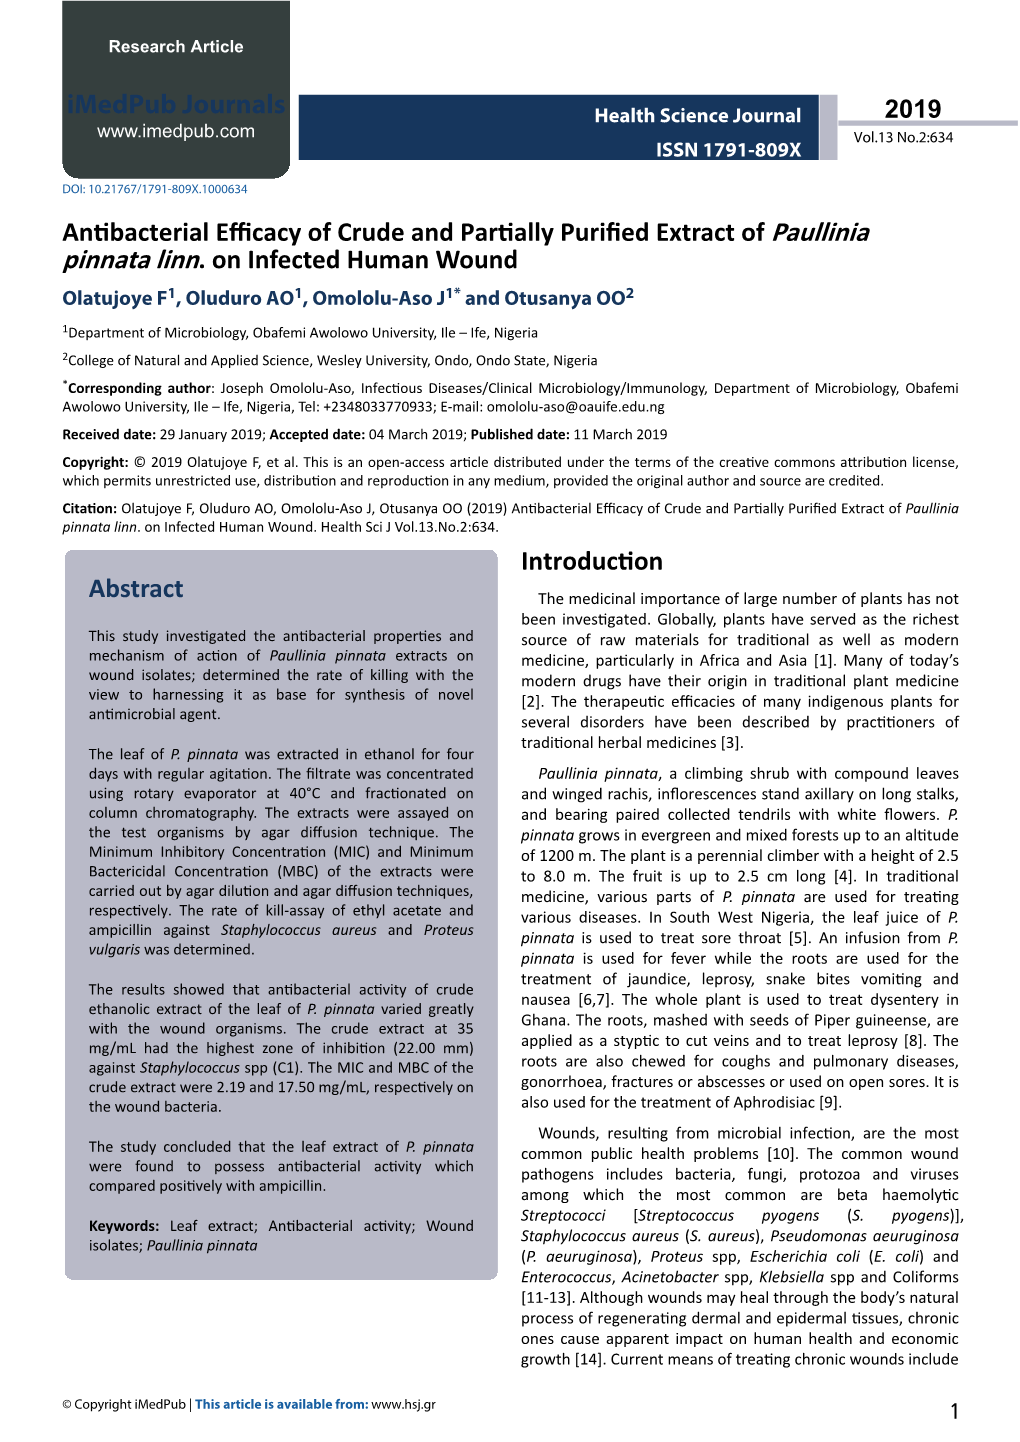 Antibacterial Efficacy of Crude and Partially Purified Extract of Paullinia Pinnata Linn